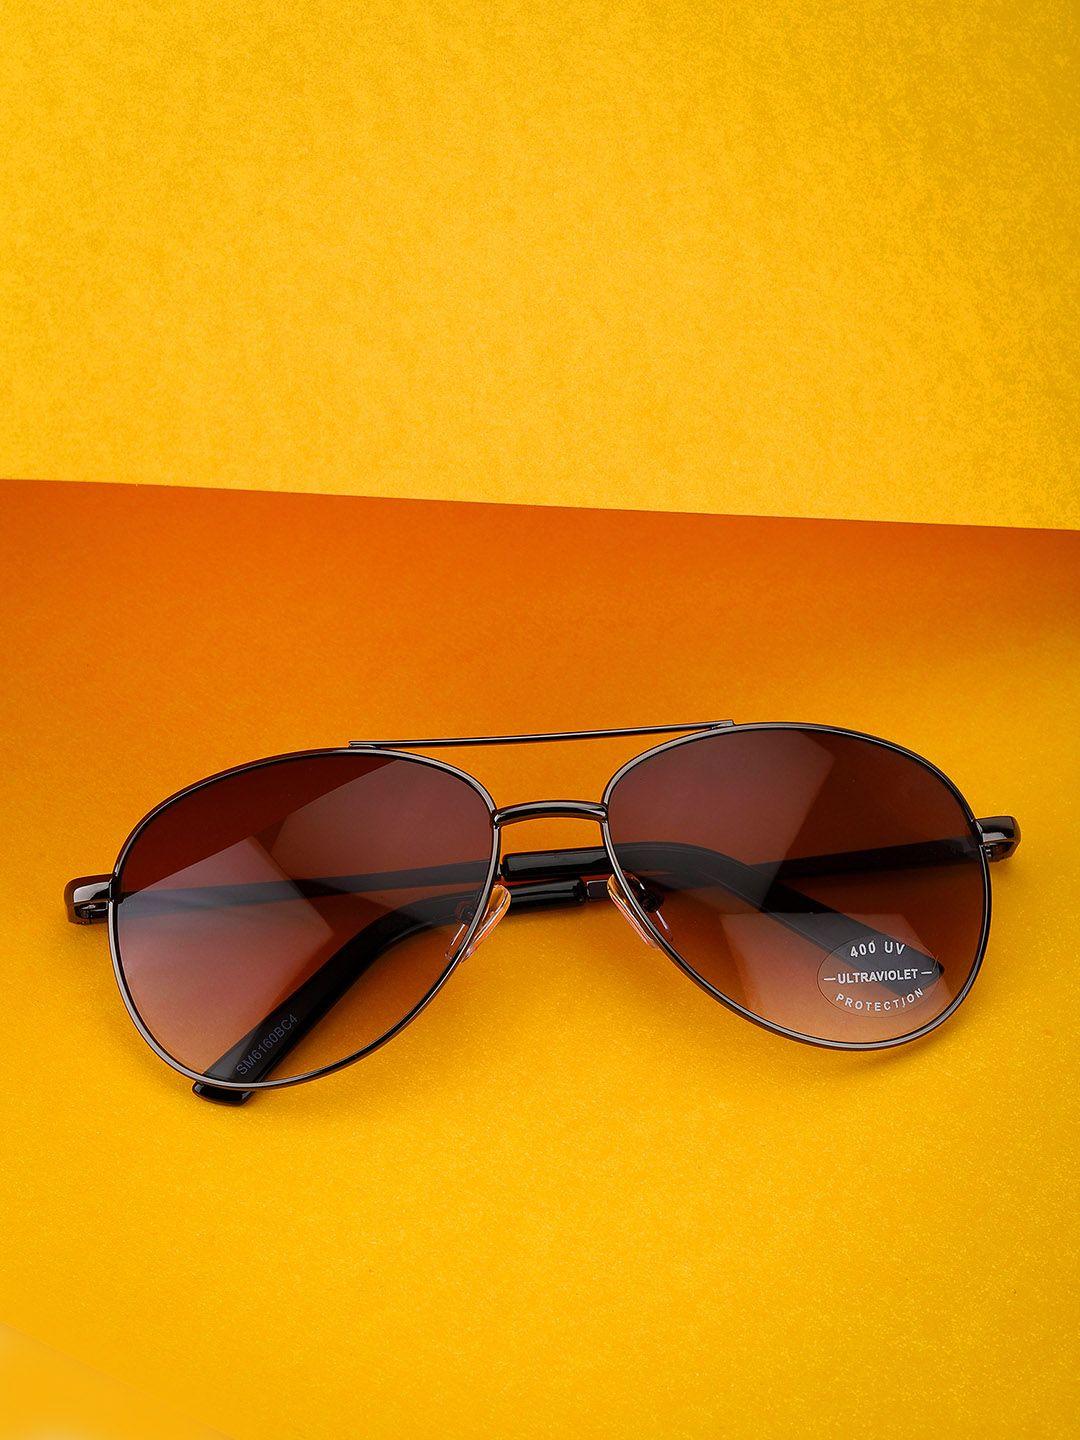 carlton-london-men-grey-aviator-sunglasses-with-uv-protected-lens-clsm003